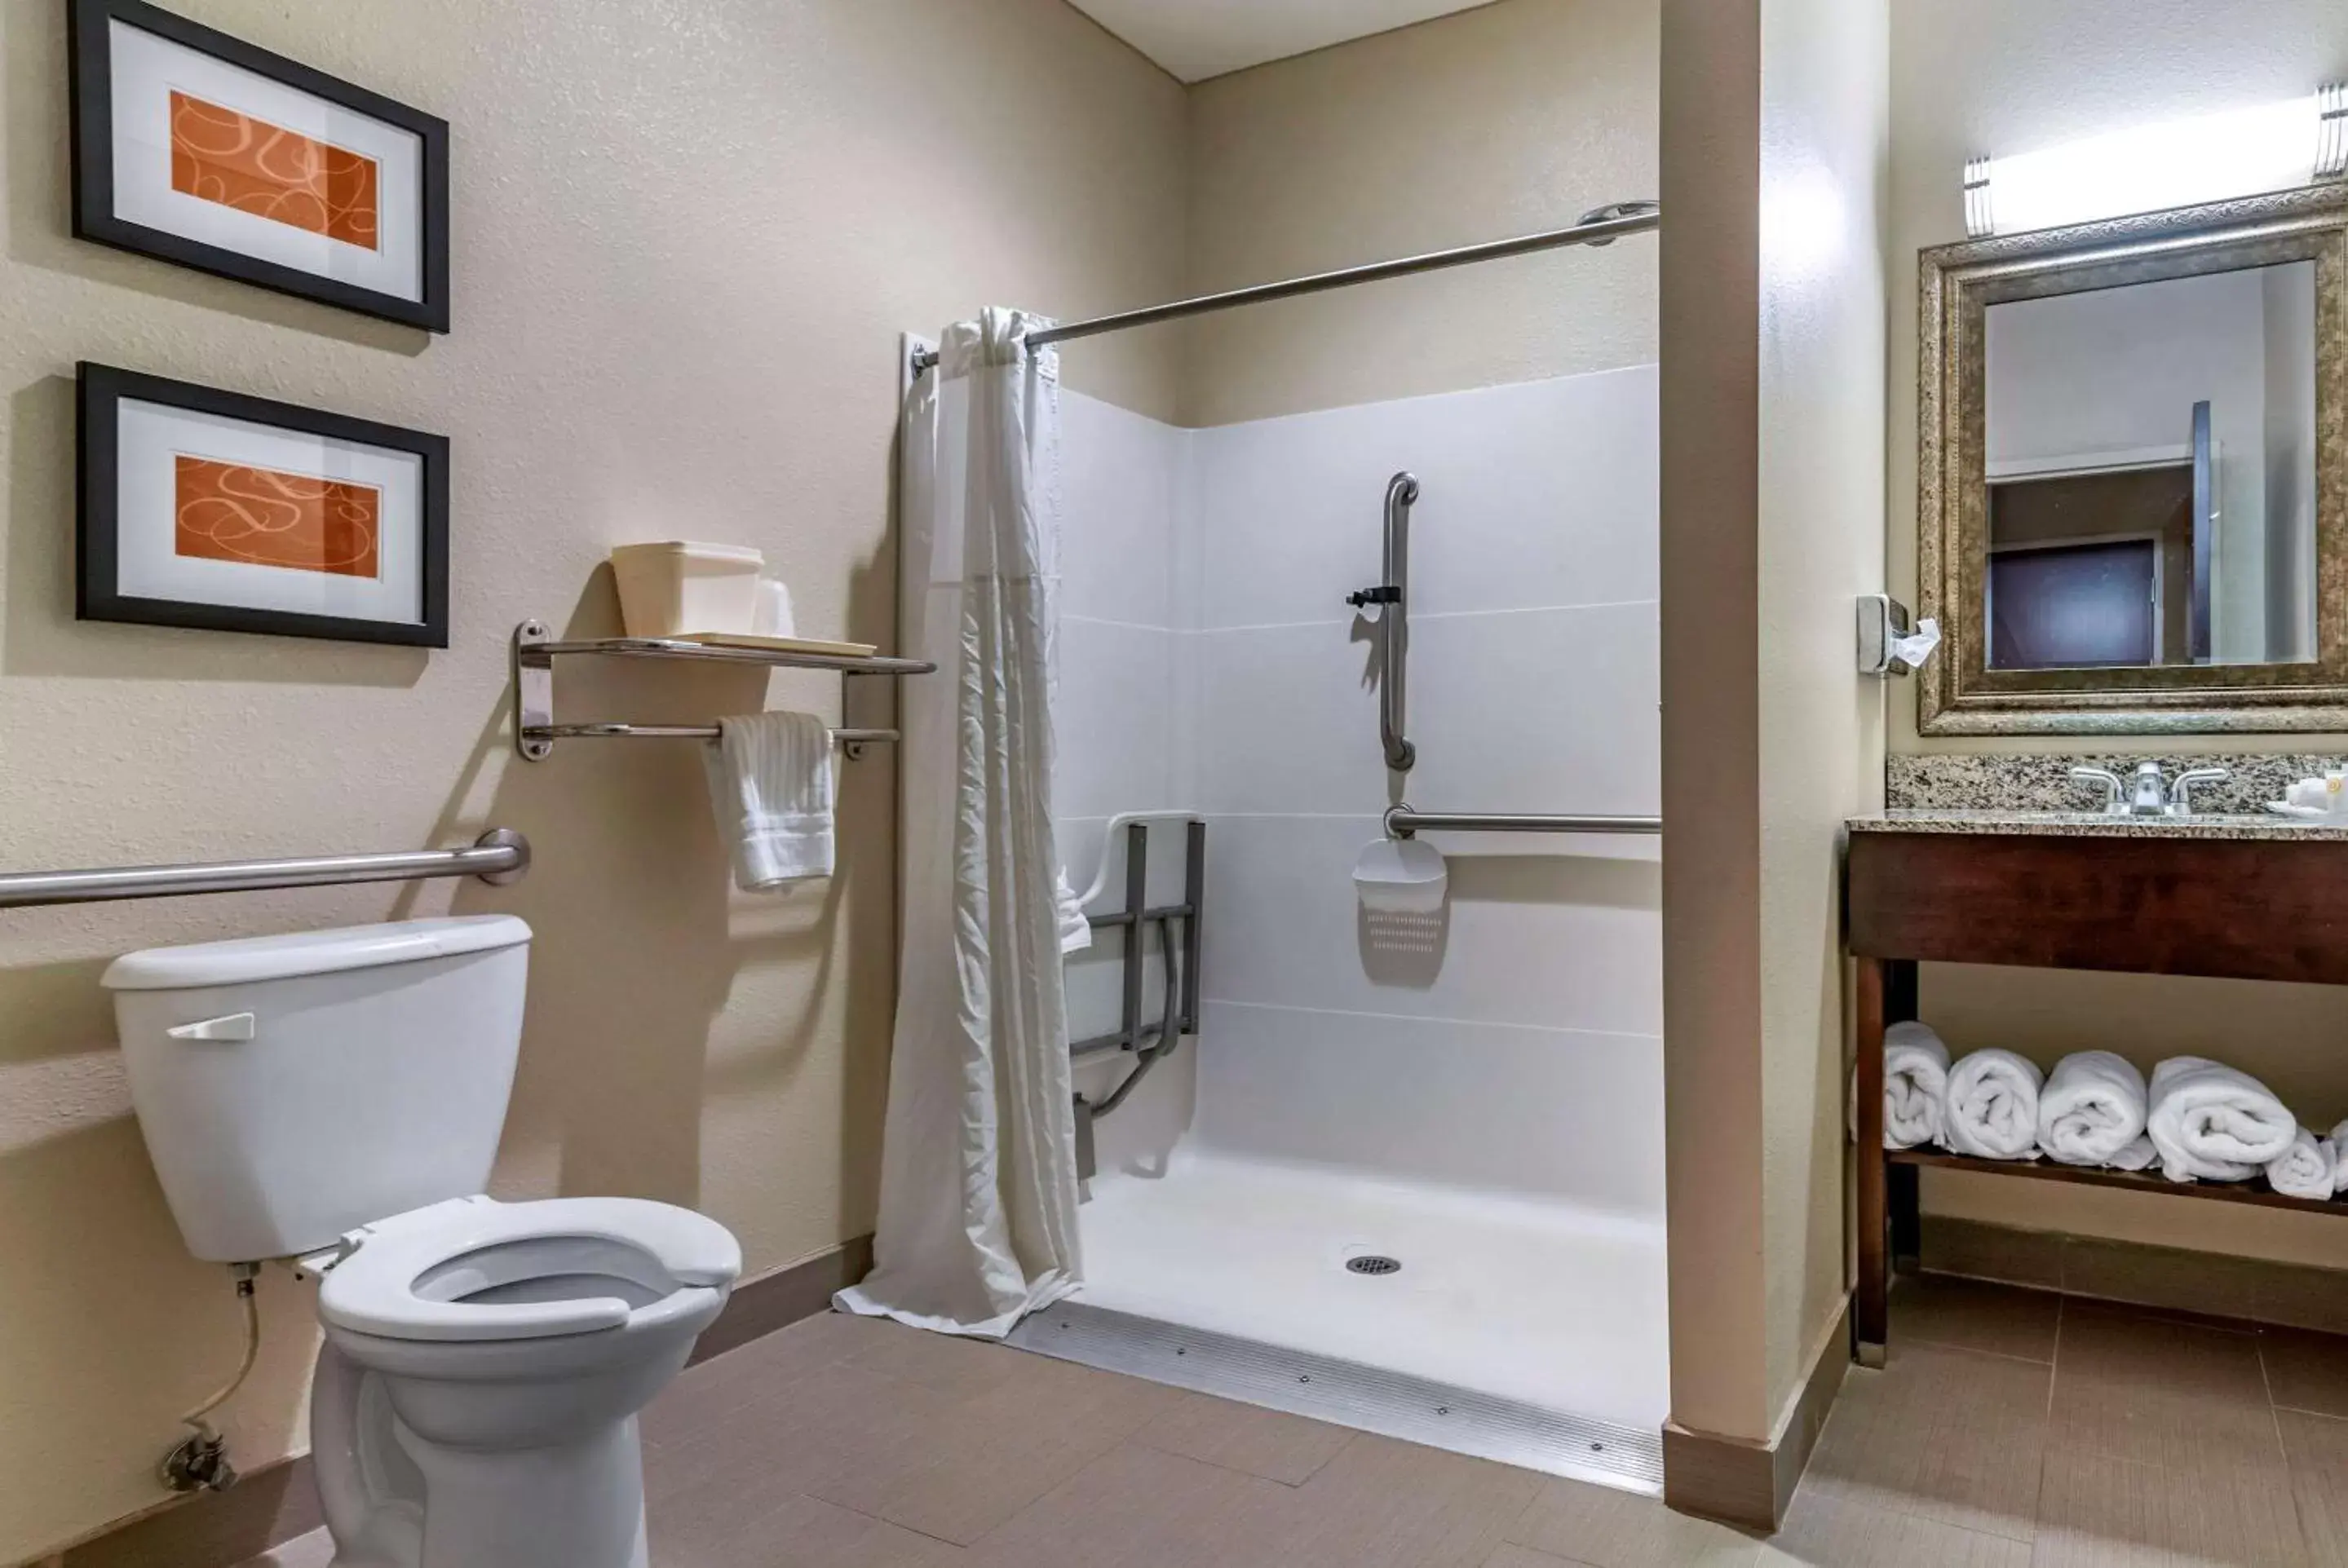 Photo of the whole room, Bathroom in Comfort Suites Biloxi/Ocean Springs